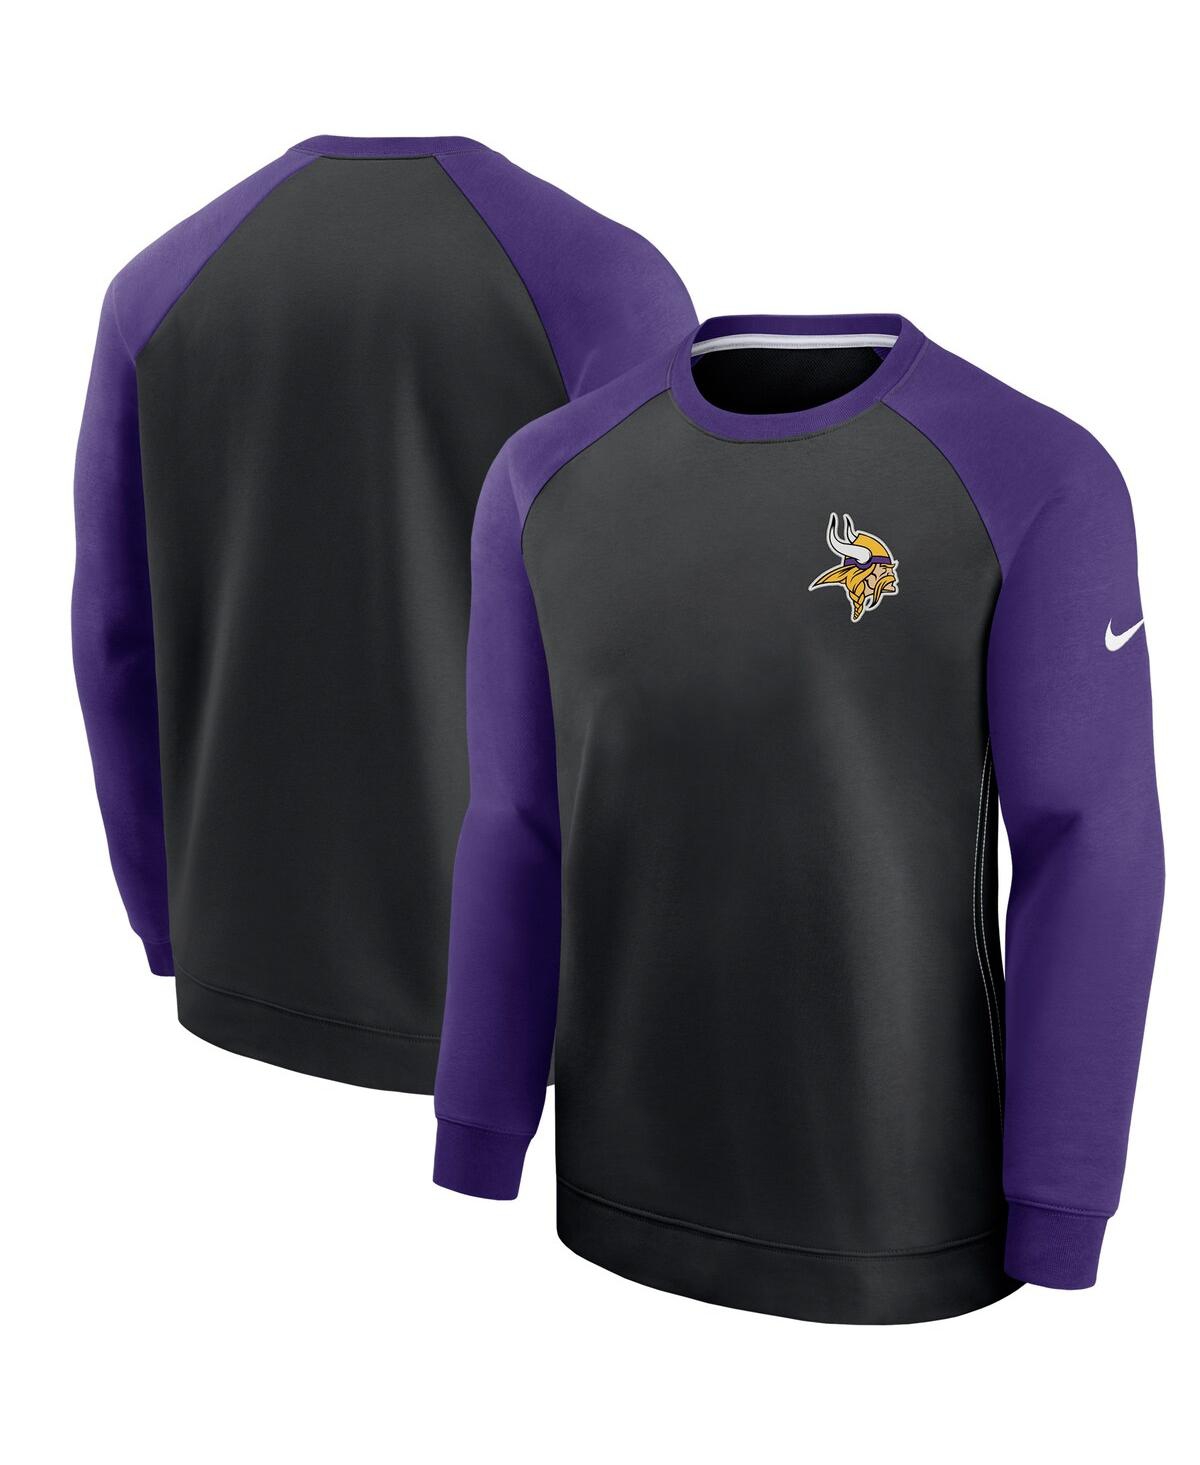 Men's Nike Black, Purple Minnesota Vikings Historic Raglan Crew Performance Sweater - Black, Purple